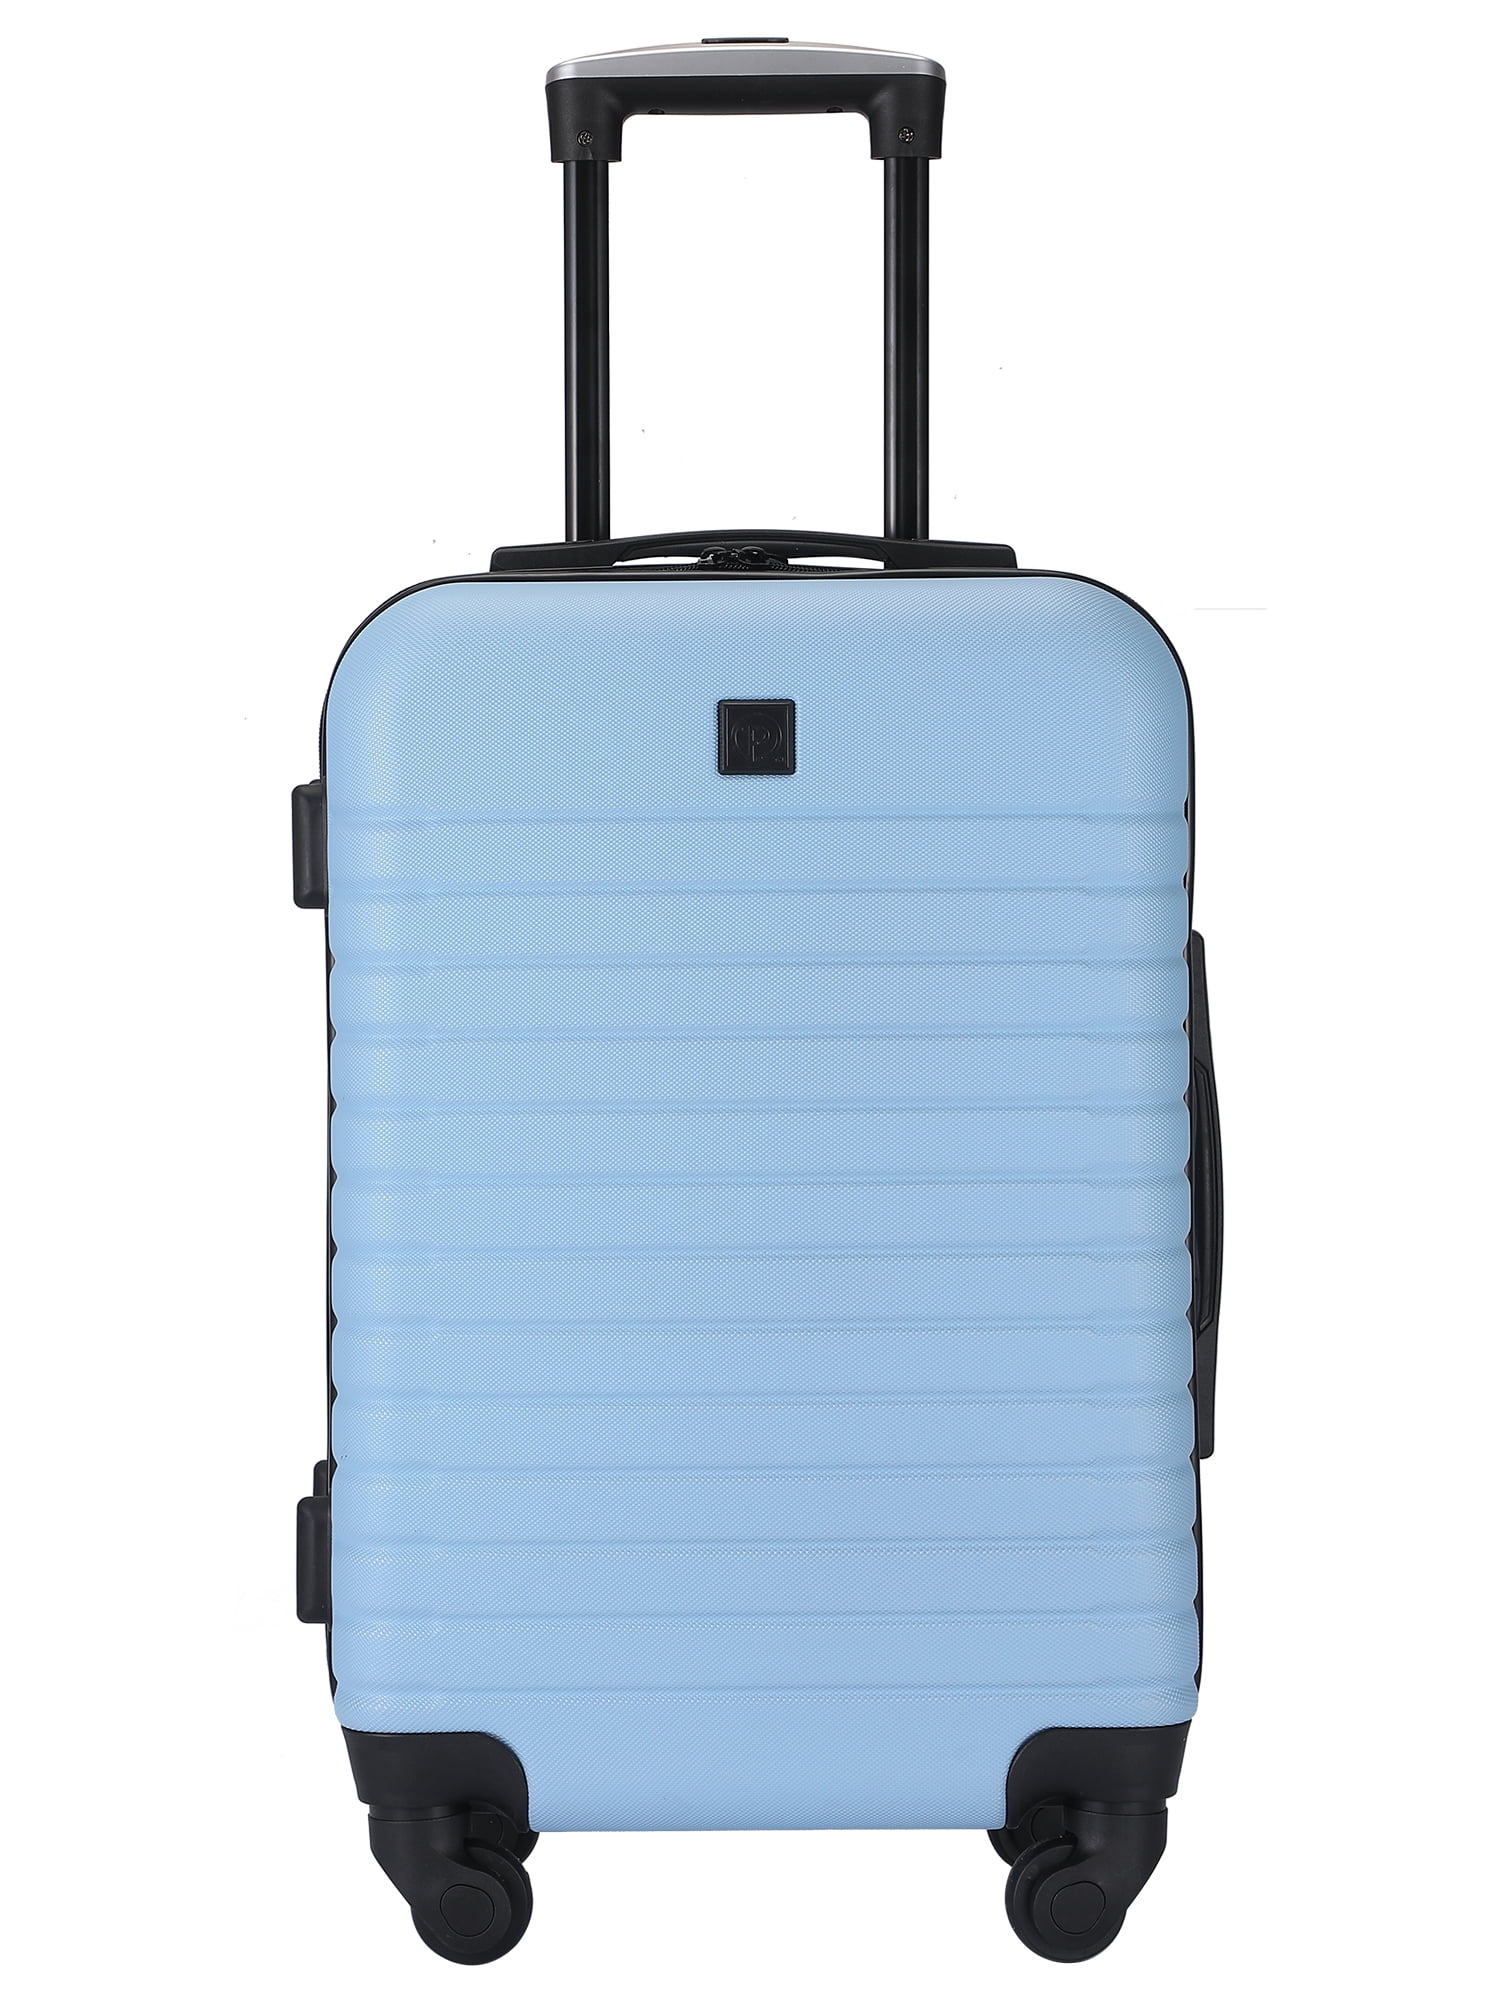 Protege 20 Hardside Carry-on Luggage 